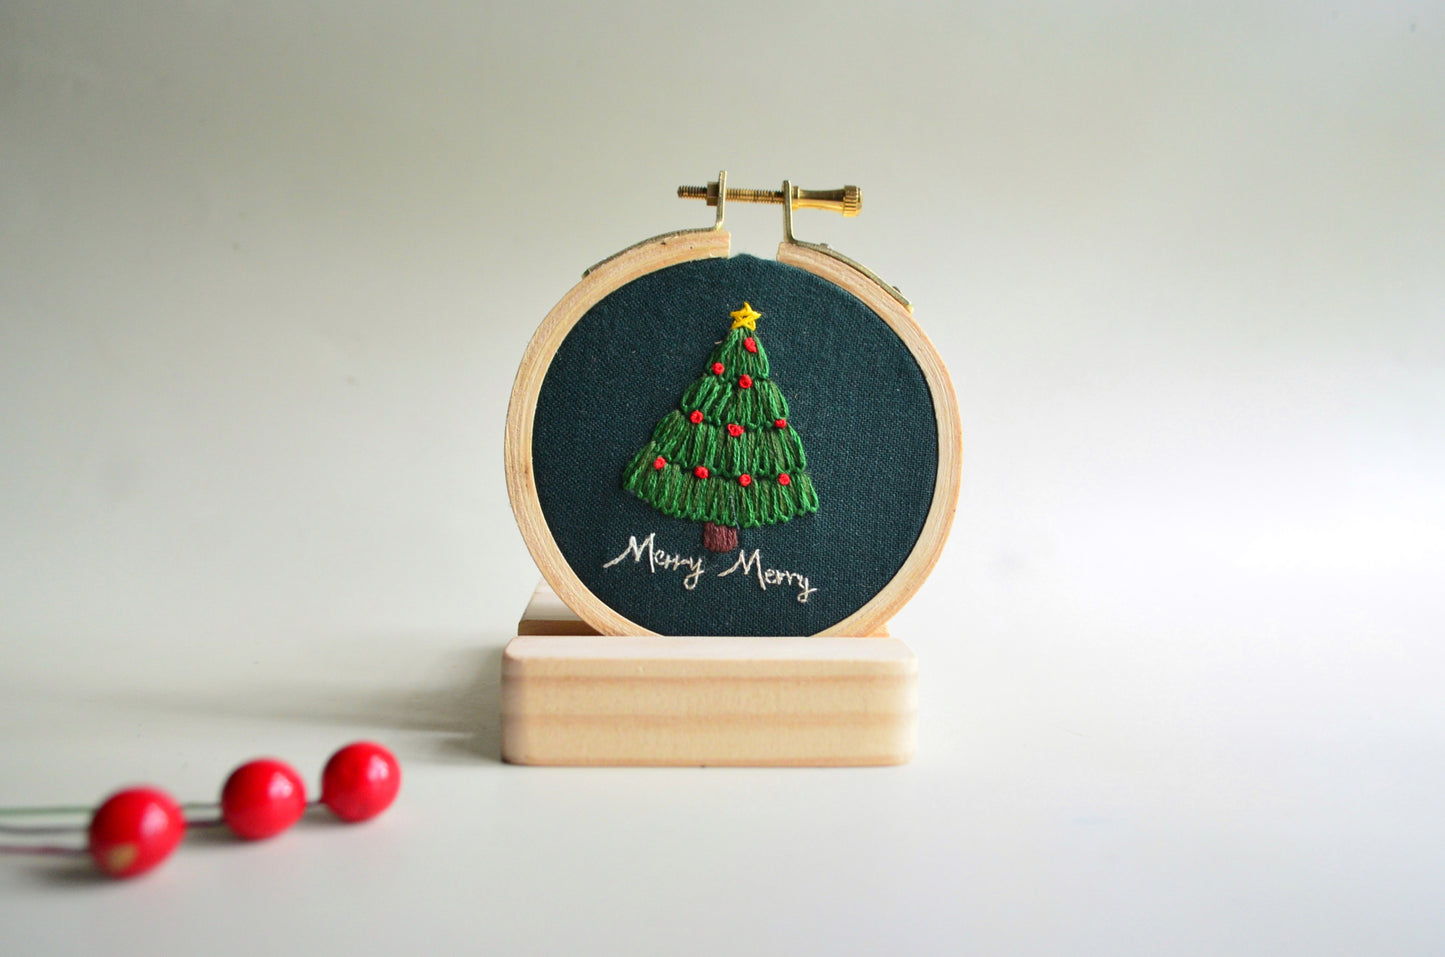 Merry Merry- 3” Christmas Tree Ornament